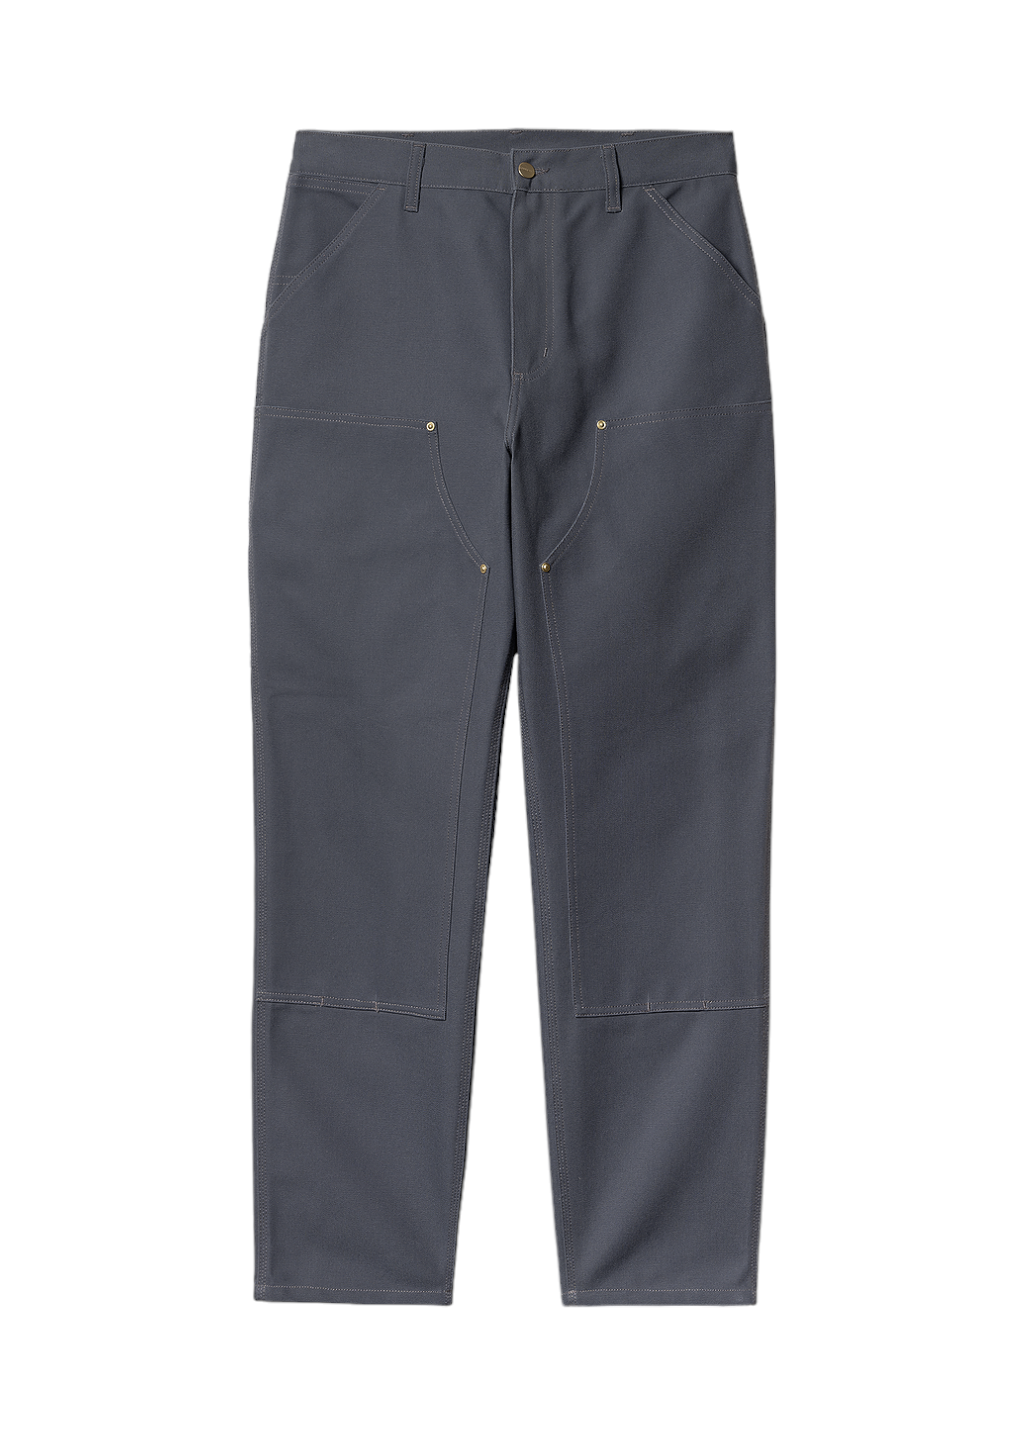 Men's Concepts Sport Gray Portland Trail Blazers Mainstream Cuffed Terry  Pants